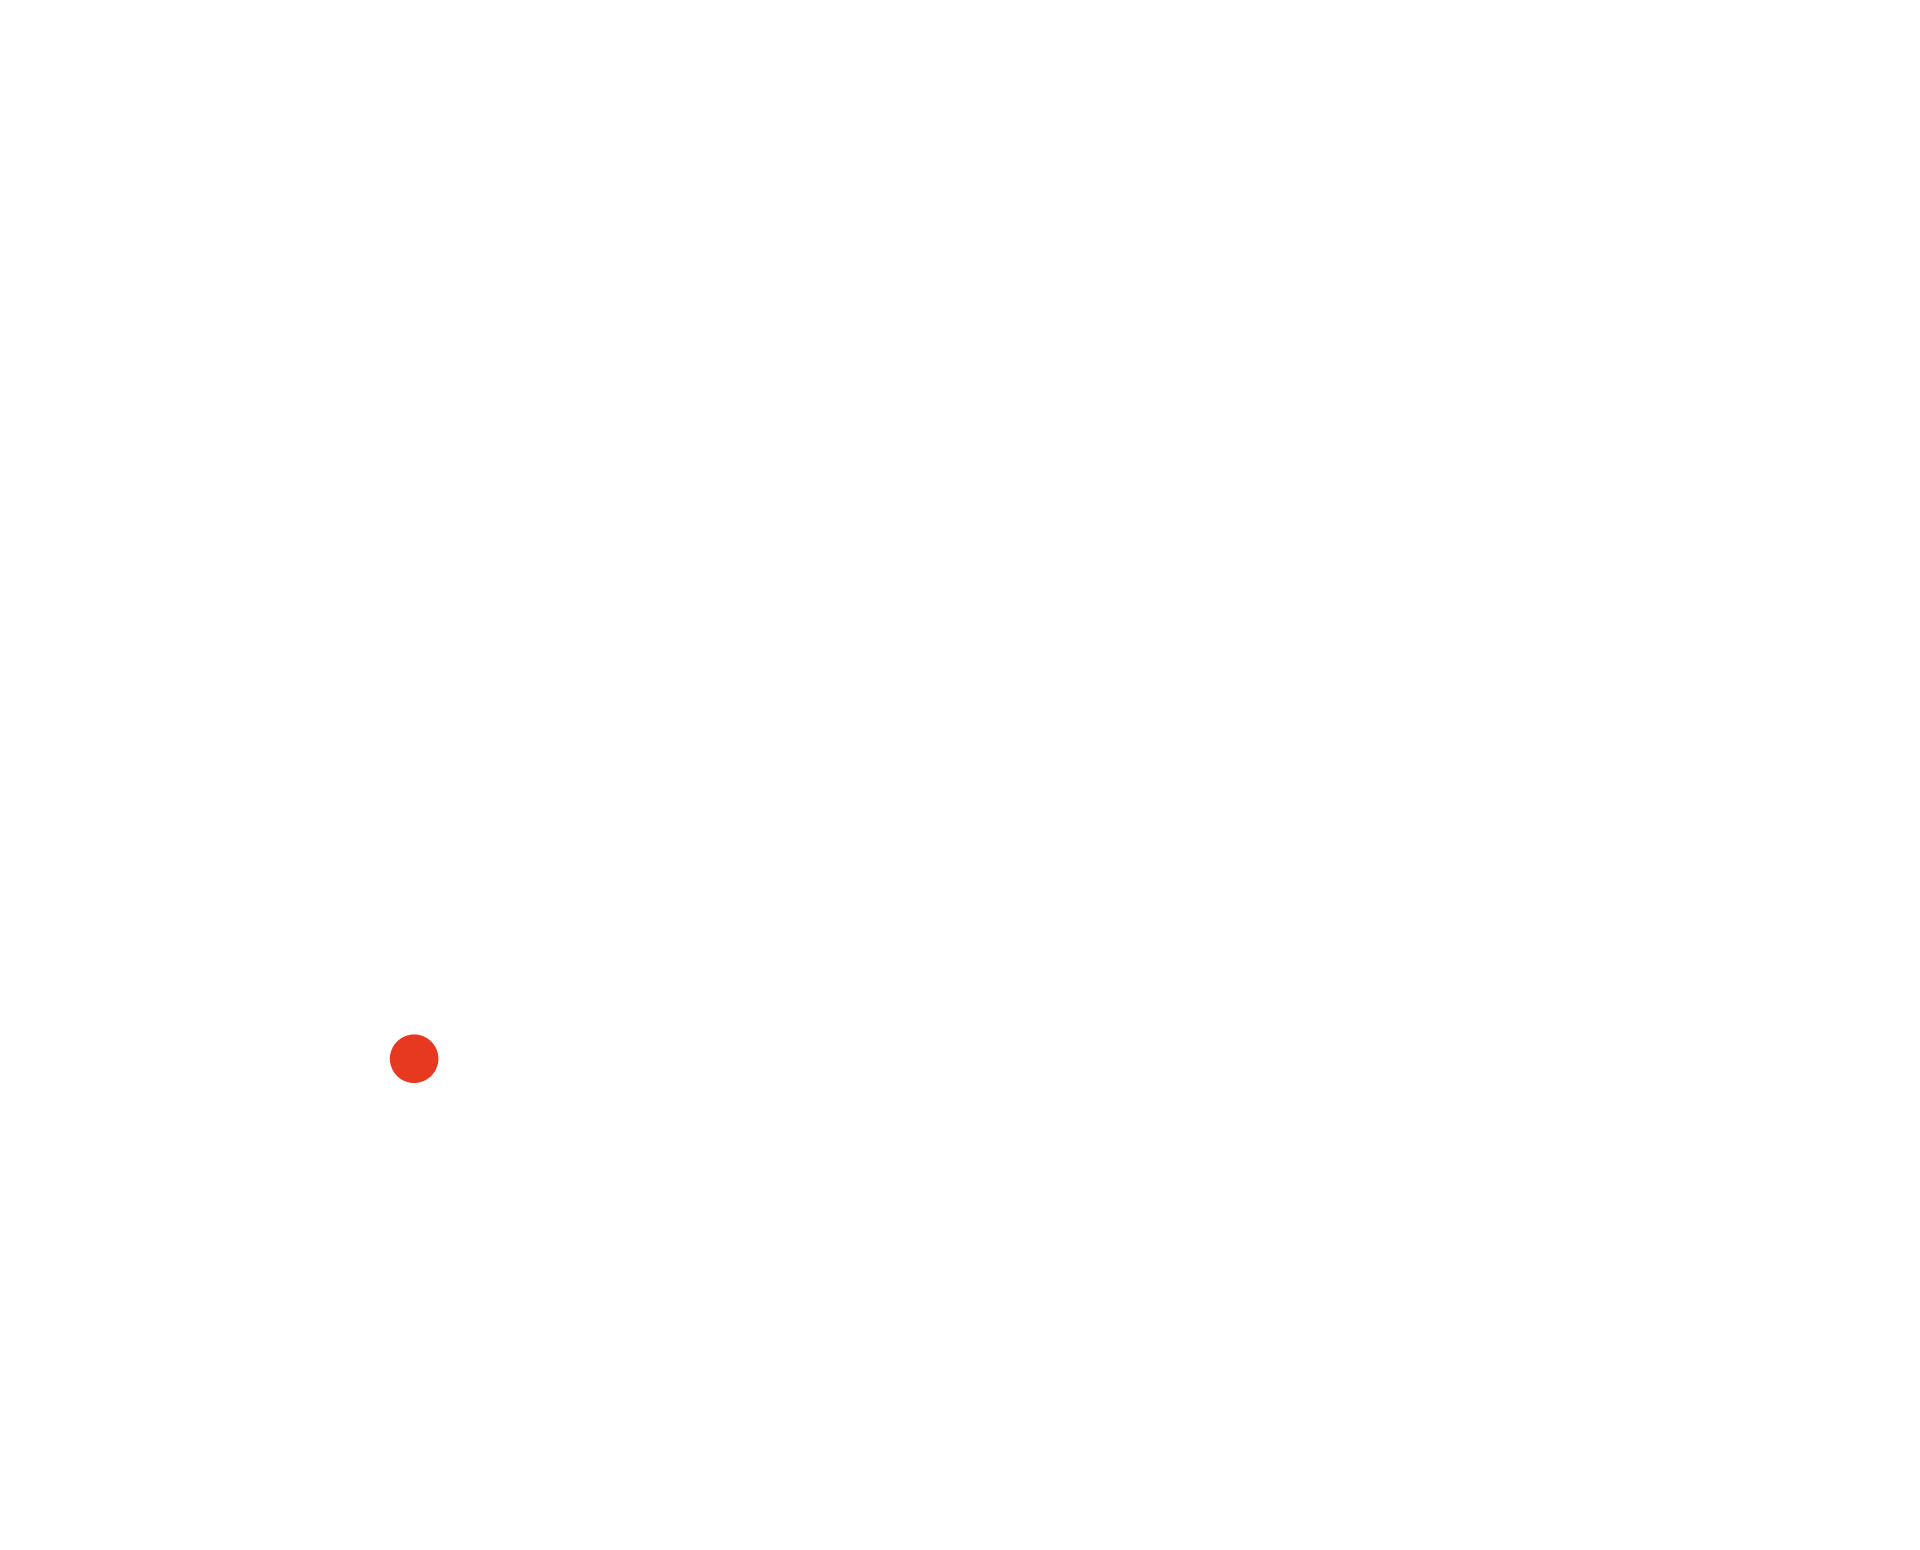 NAGASAKI August 9, 1945